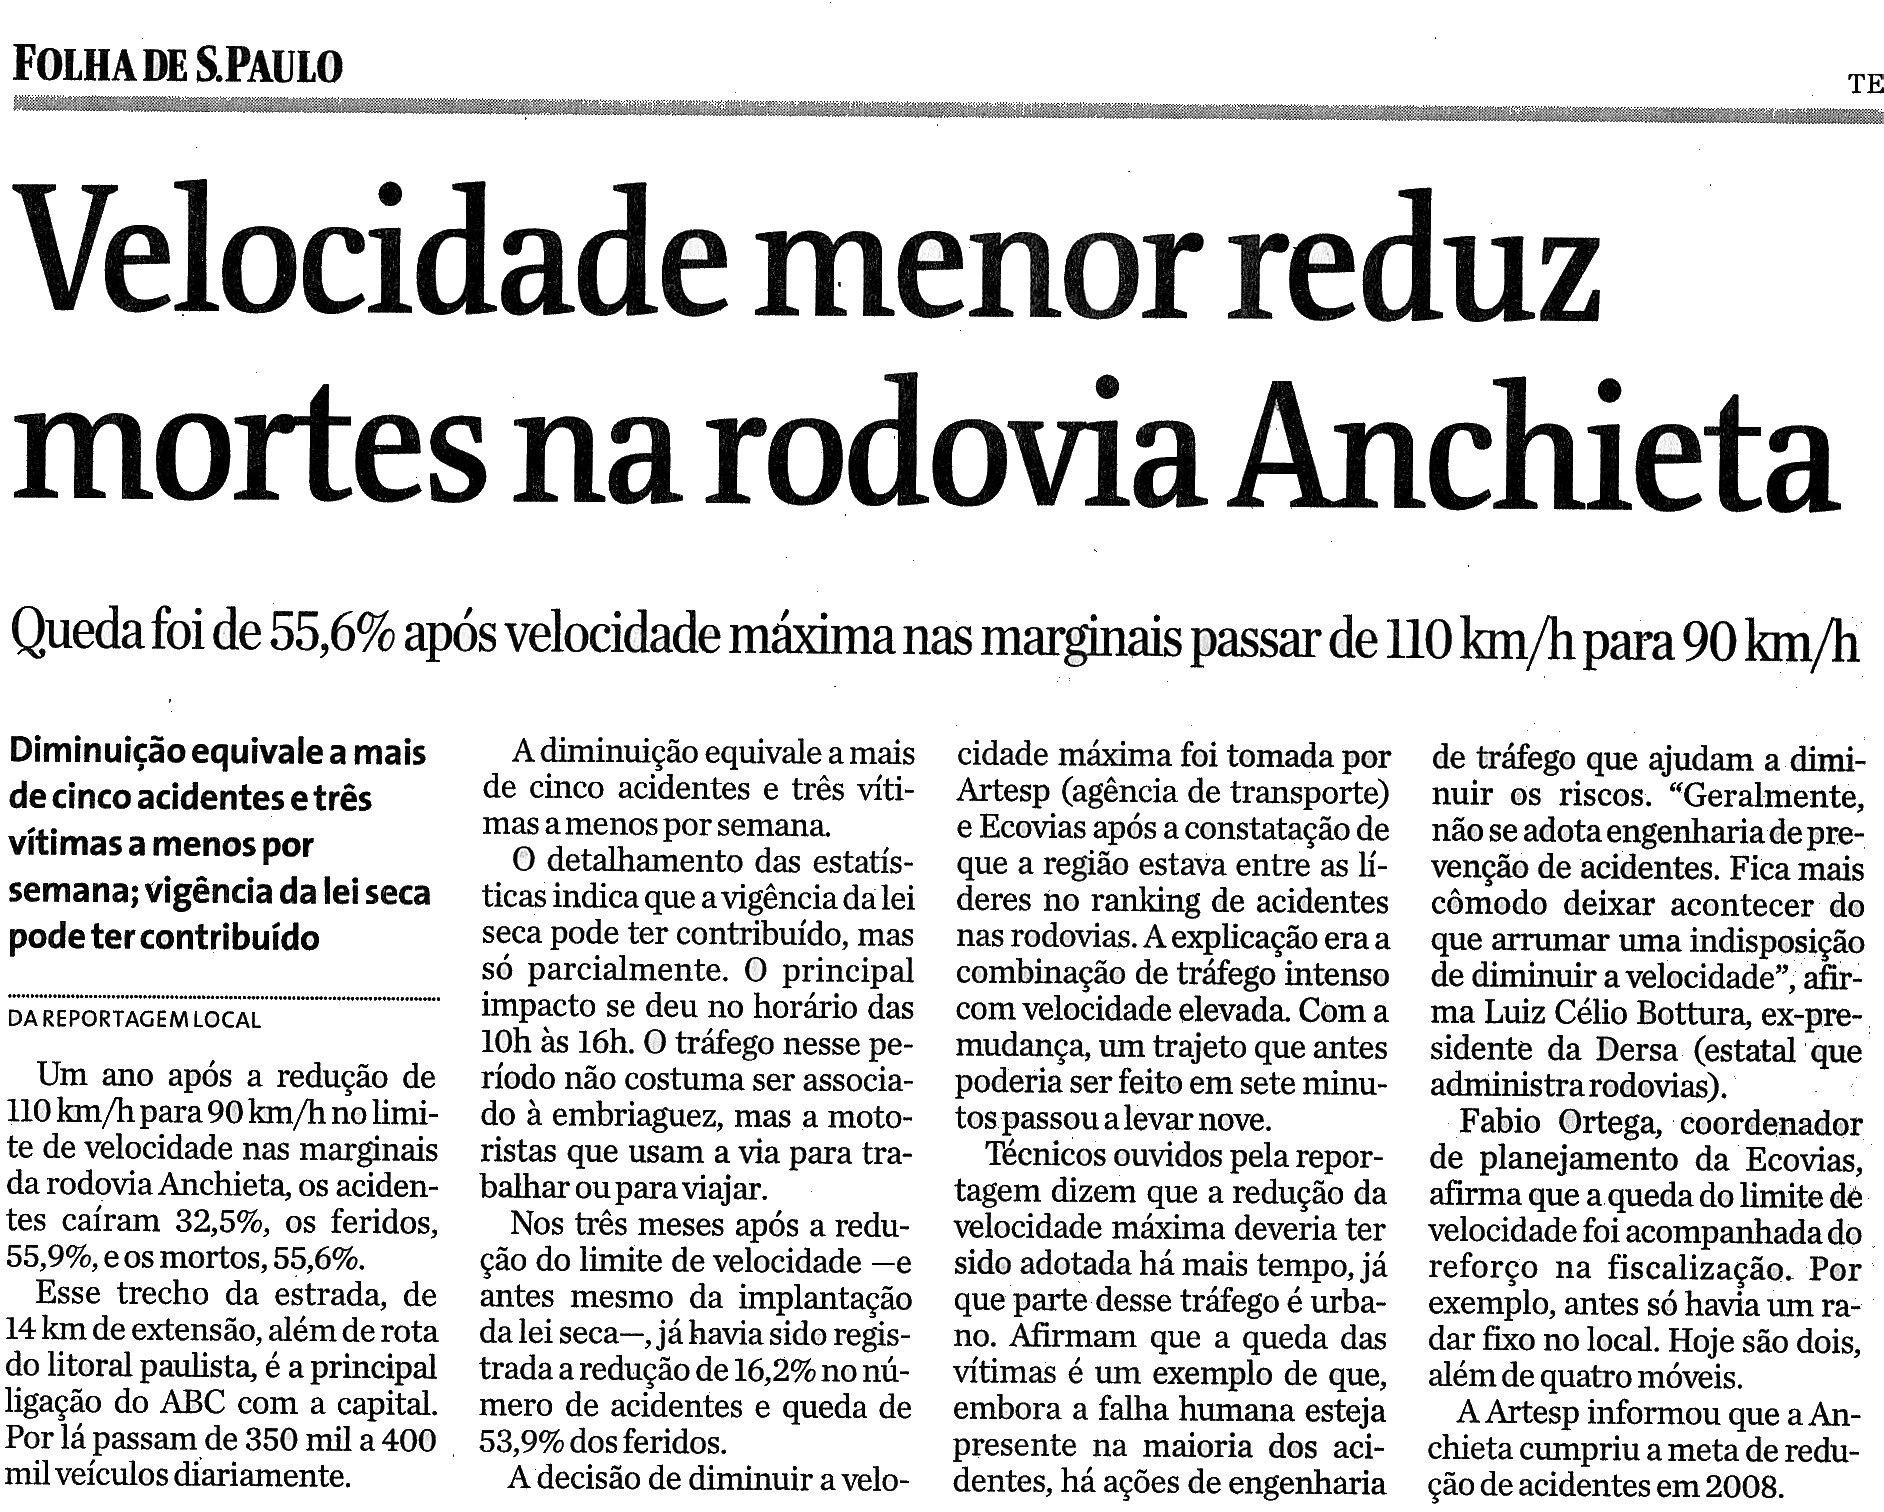 Folha de S. Paulo, 7.abr.09 25.